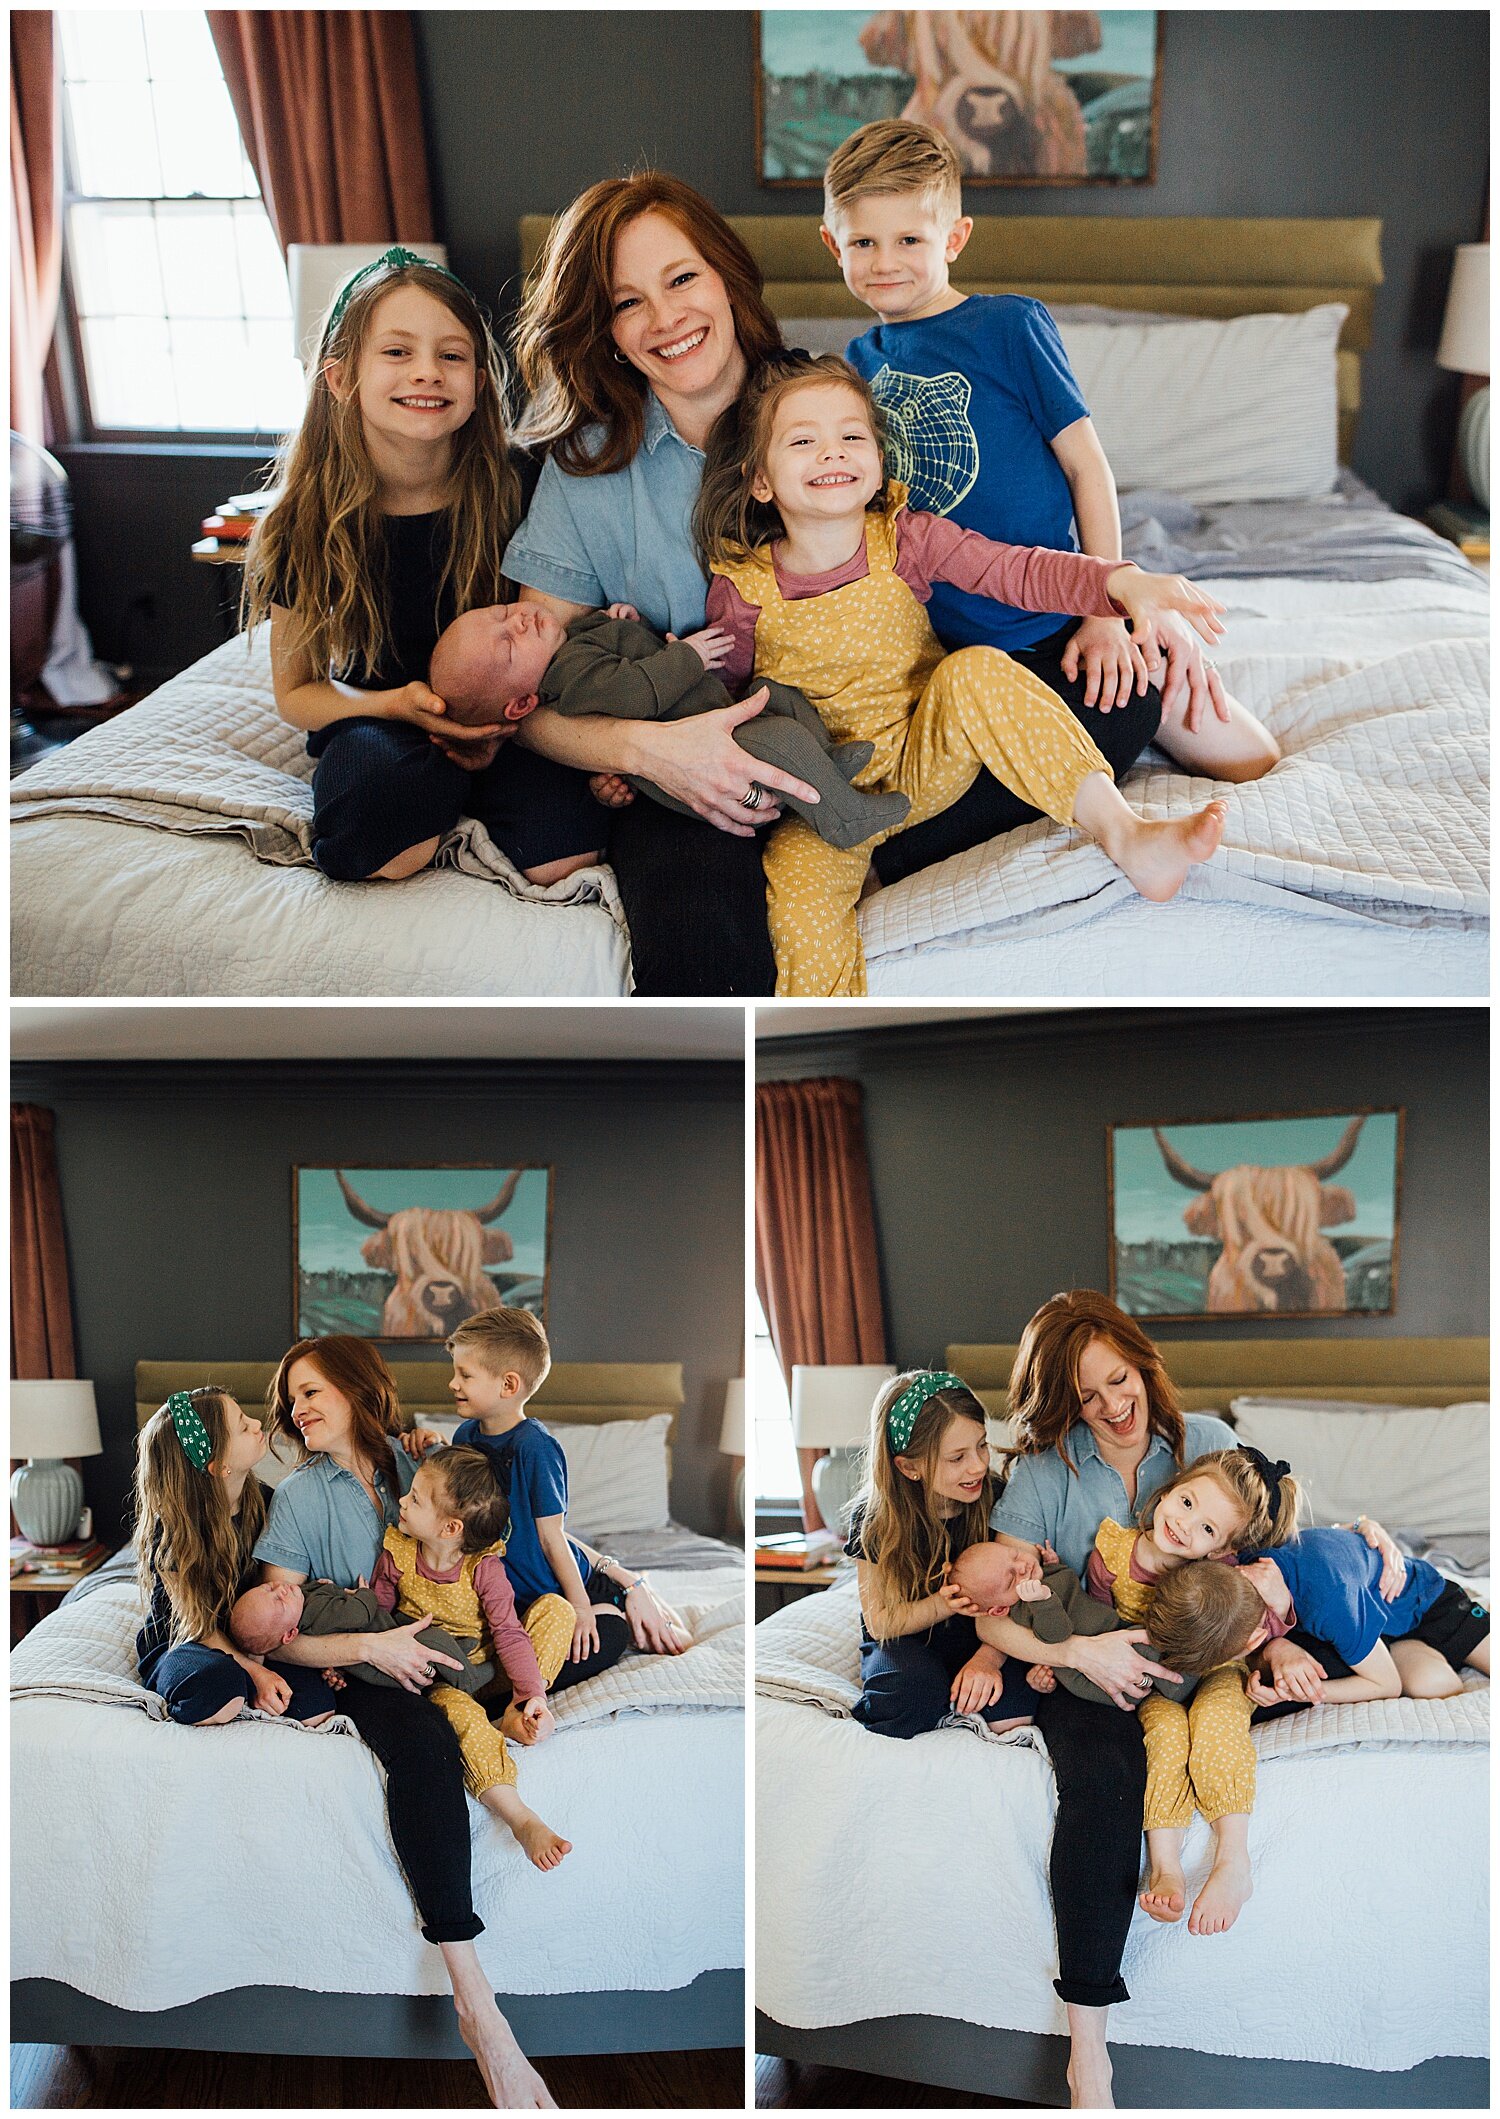 motherhood | Louisville newborn photography | Kelly Lovan photography | mother's love | siblings